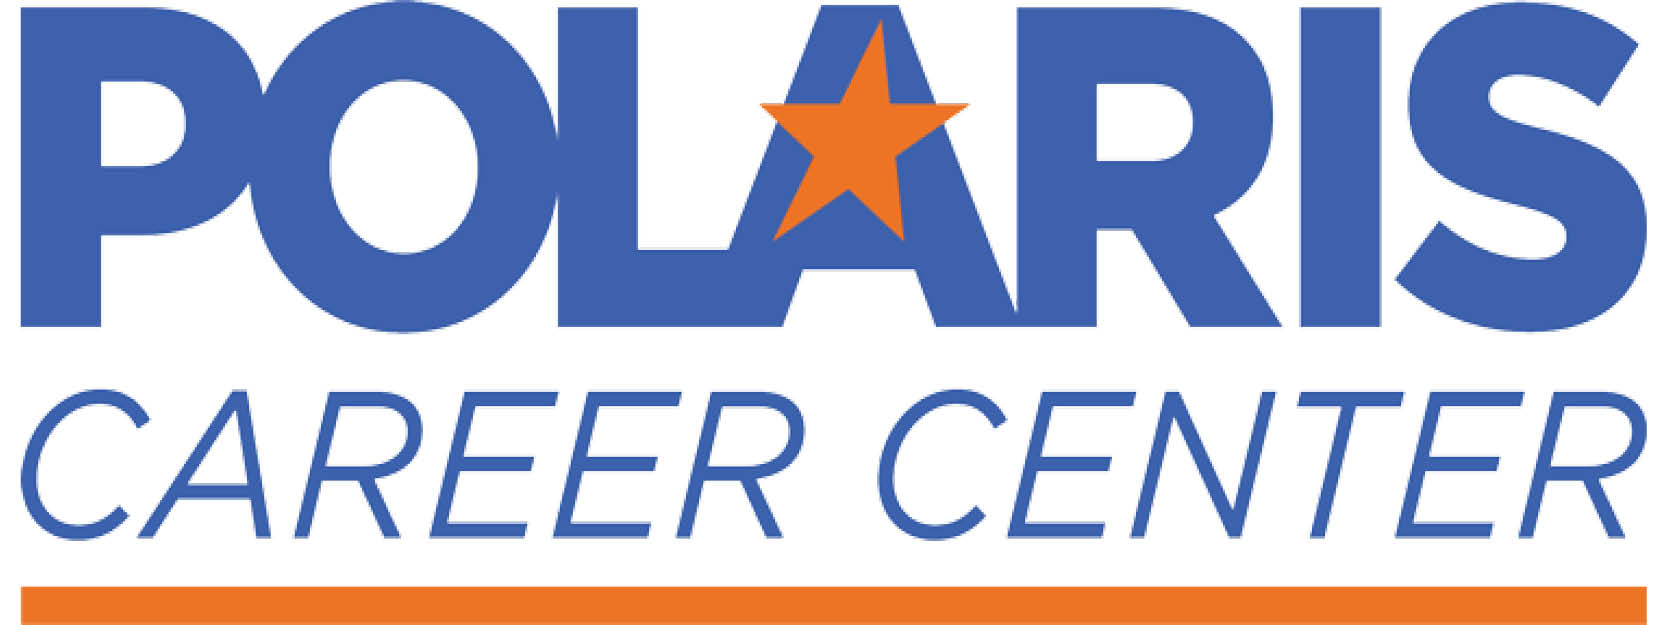 Polaris Career center logo